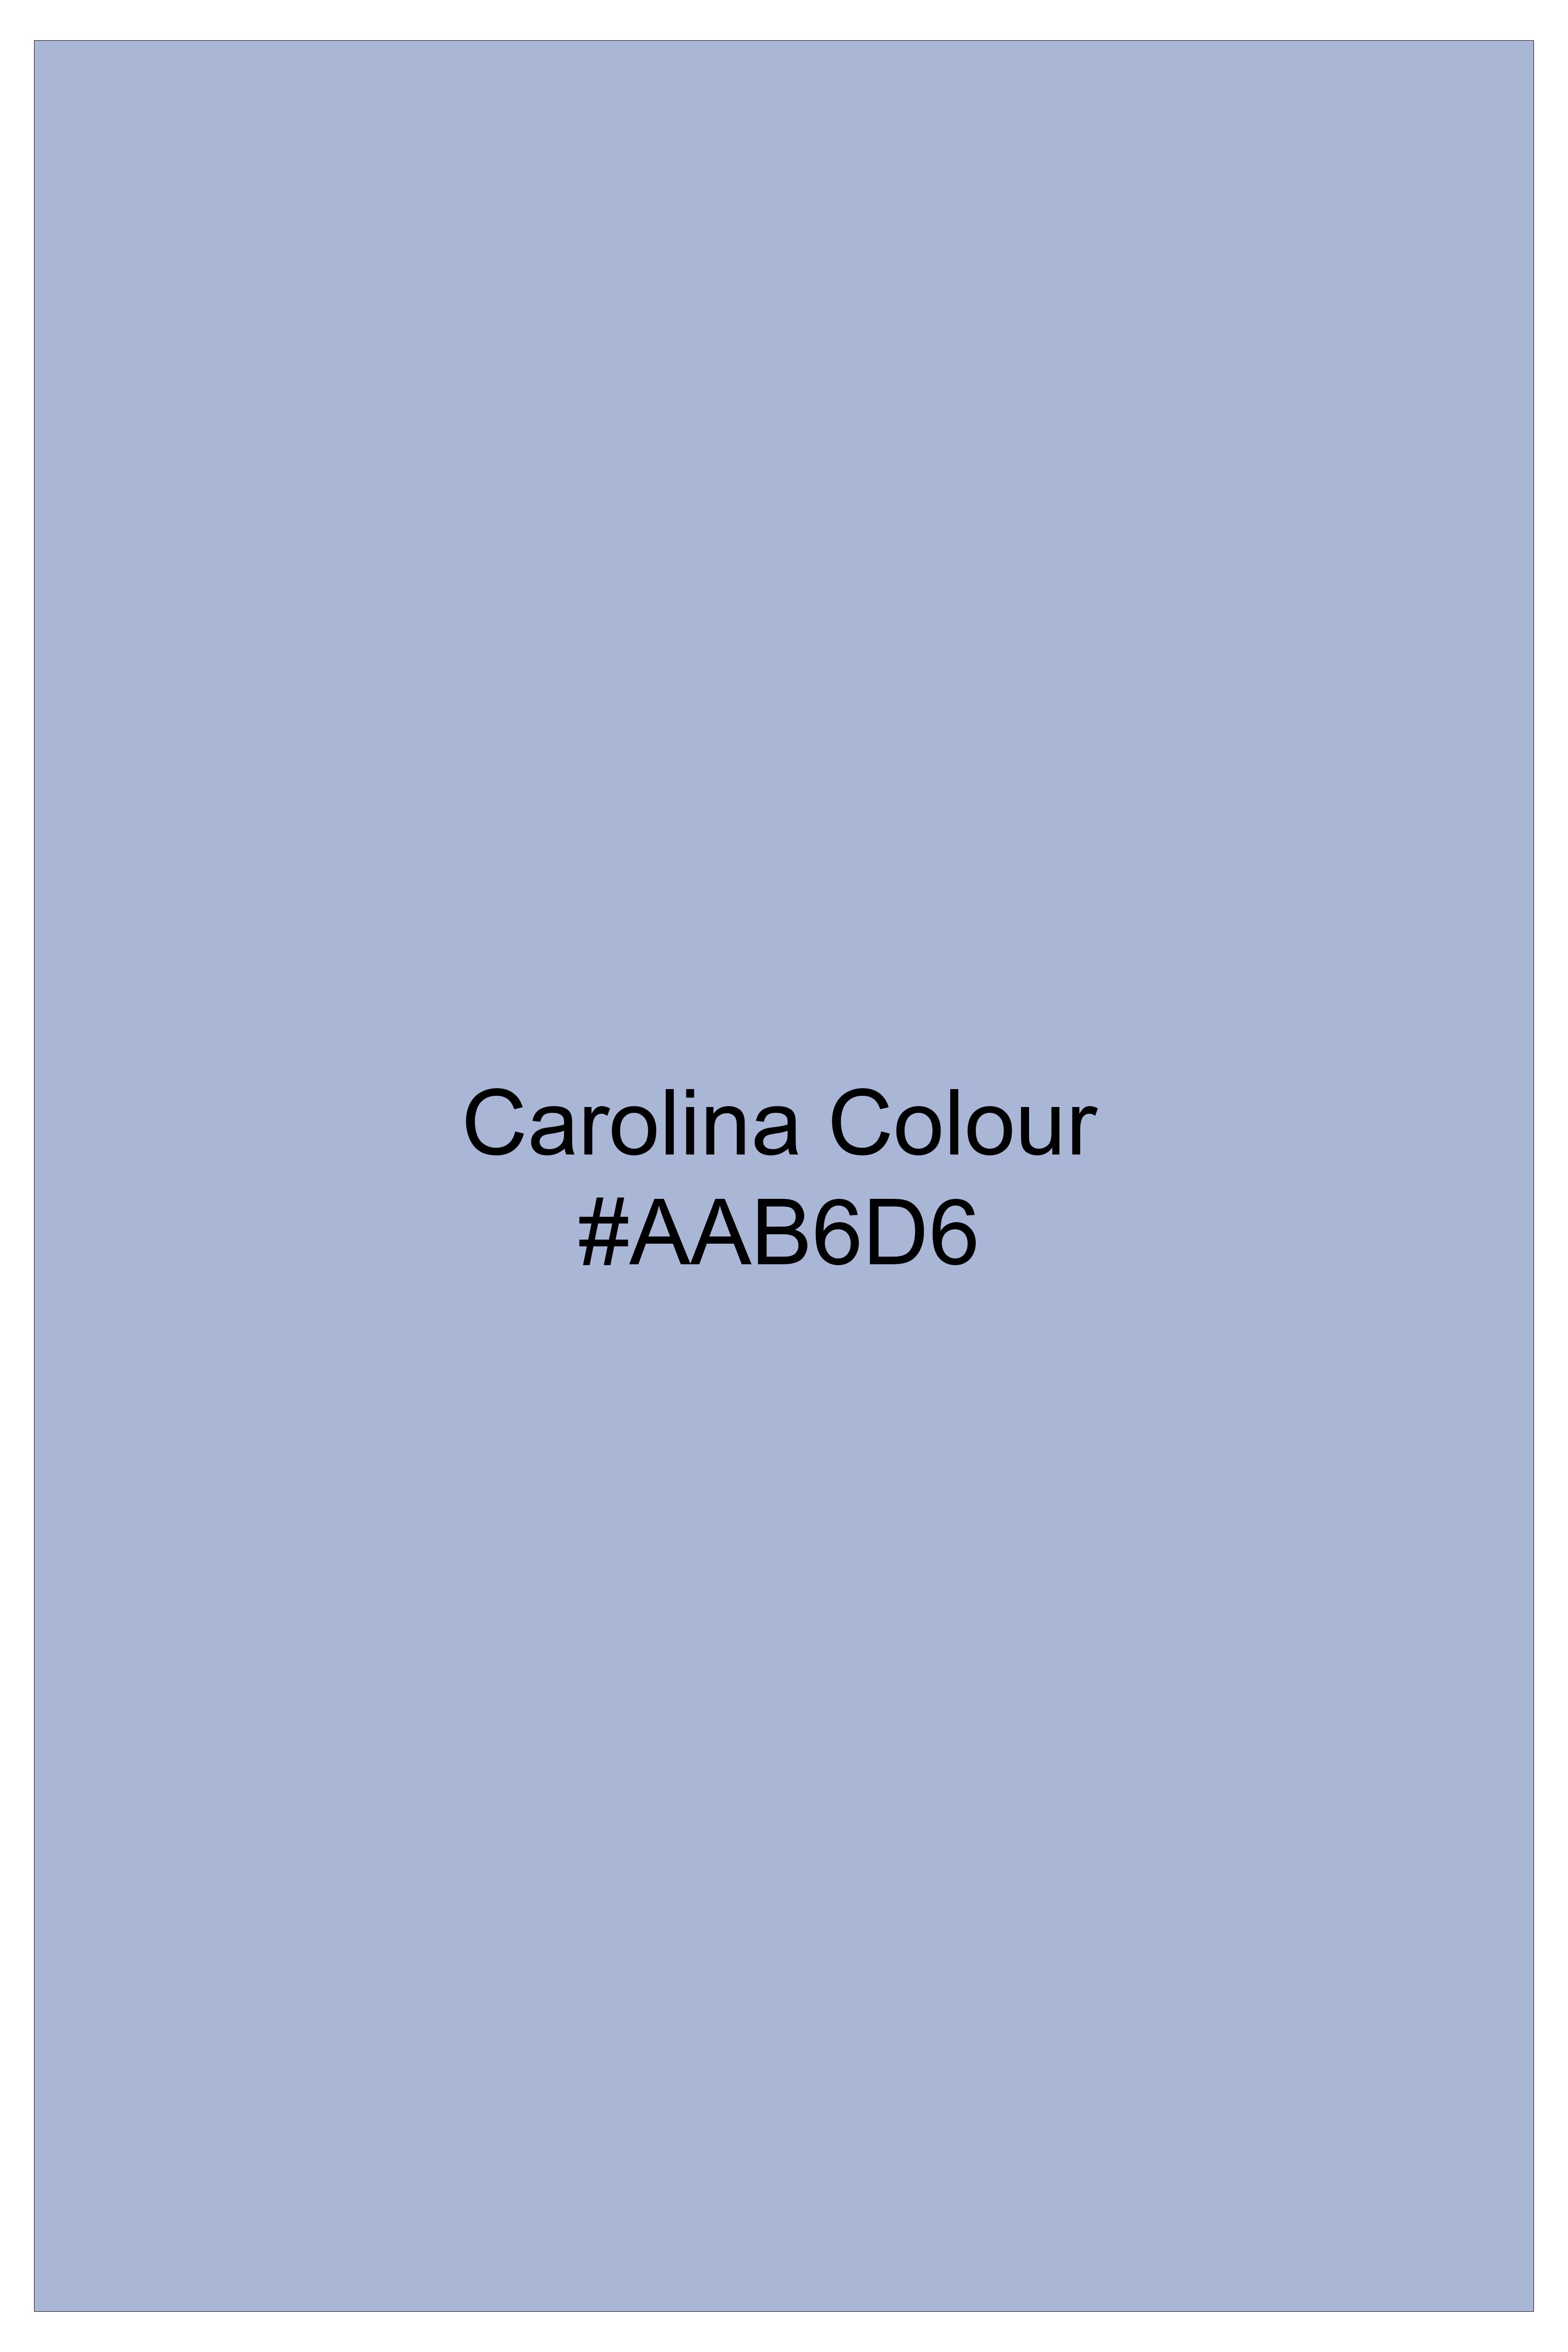 Carolina Blue Dobby Textured Premium Giza Cotton Designer Shirt